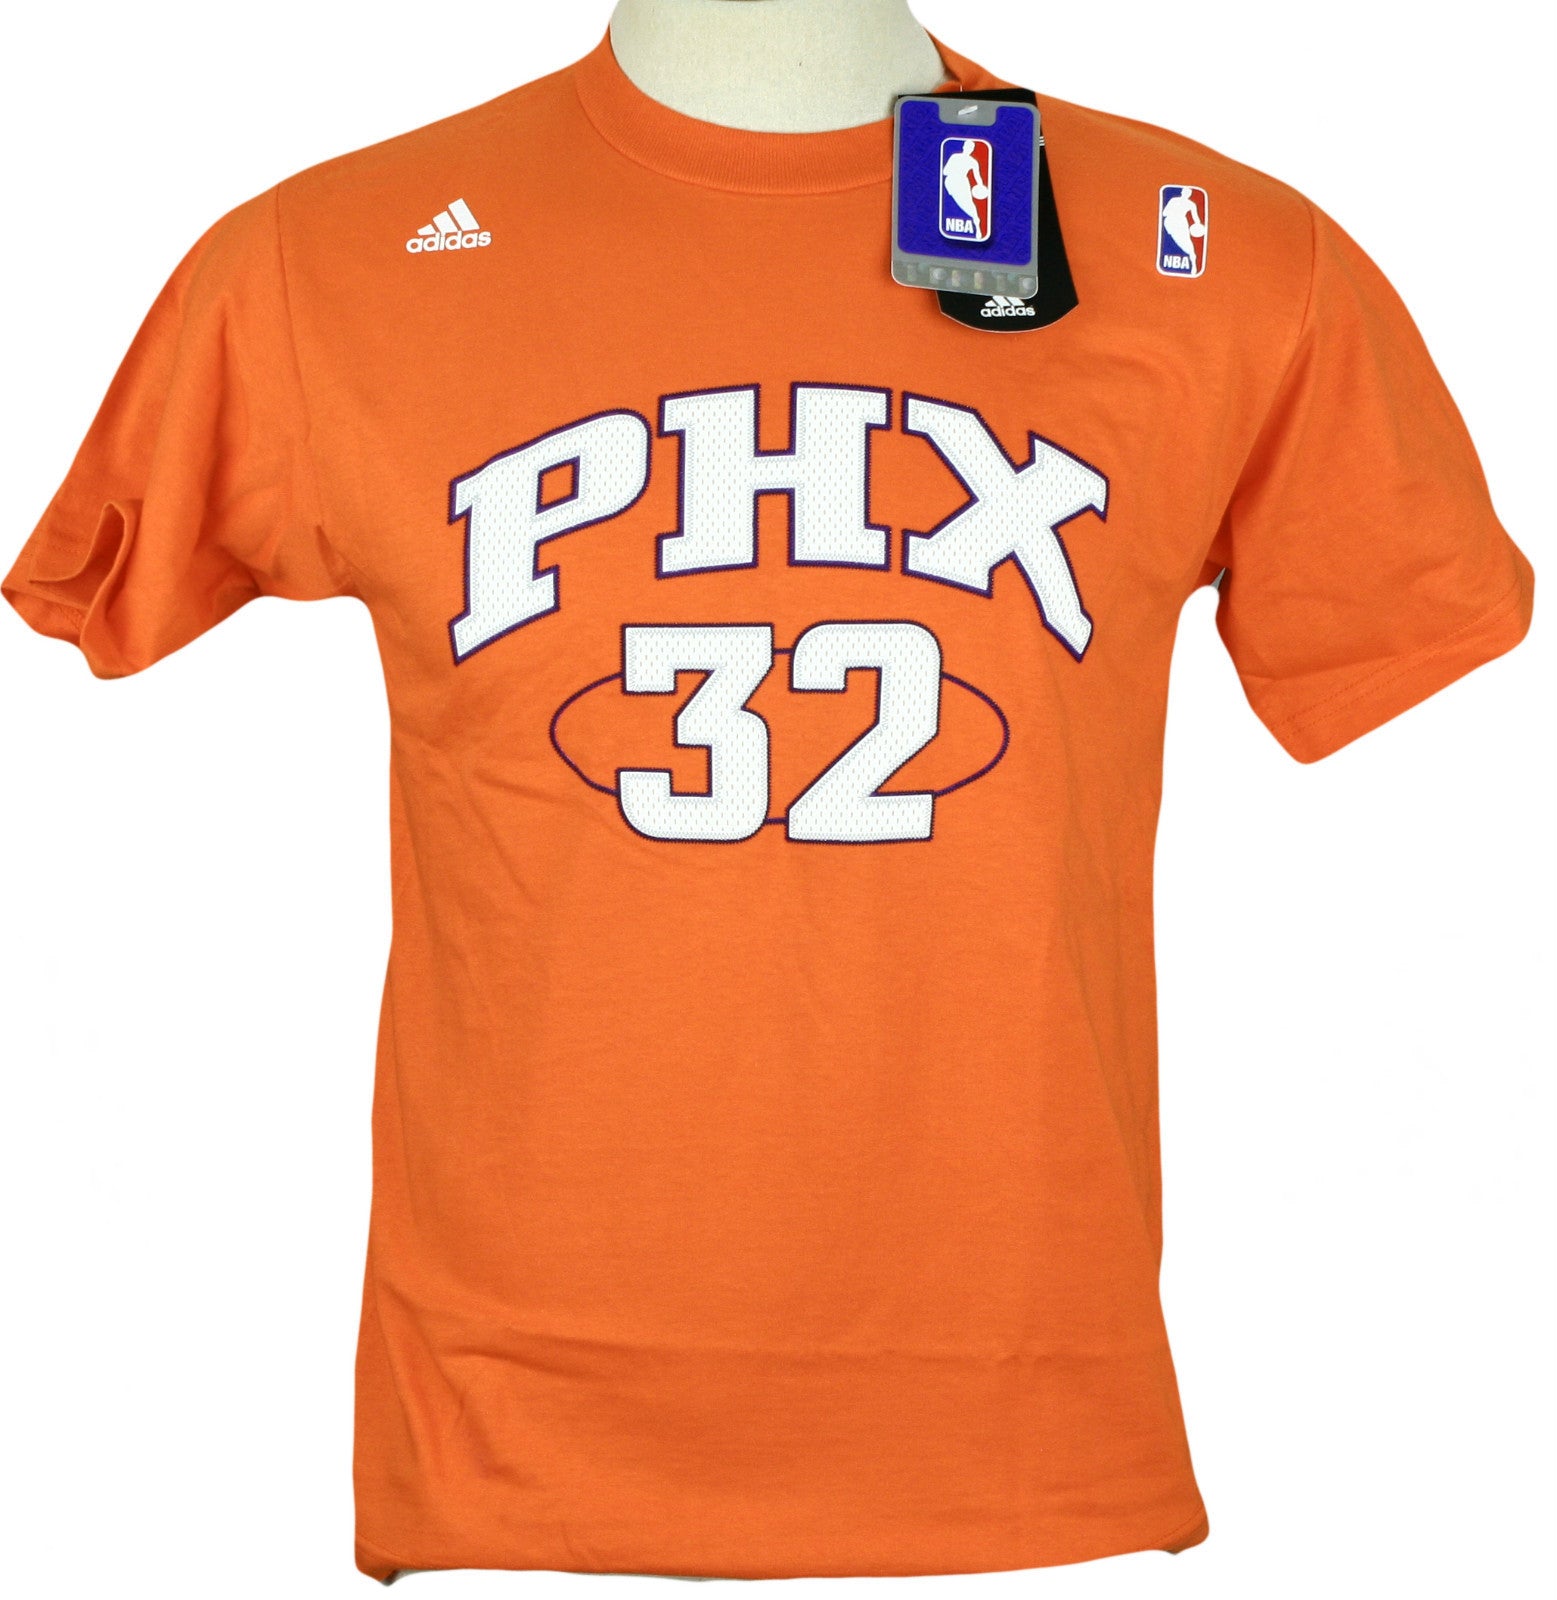 NBA Basketball Youth Phoenix Suns Short Sleeve T-Shirt - Orange